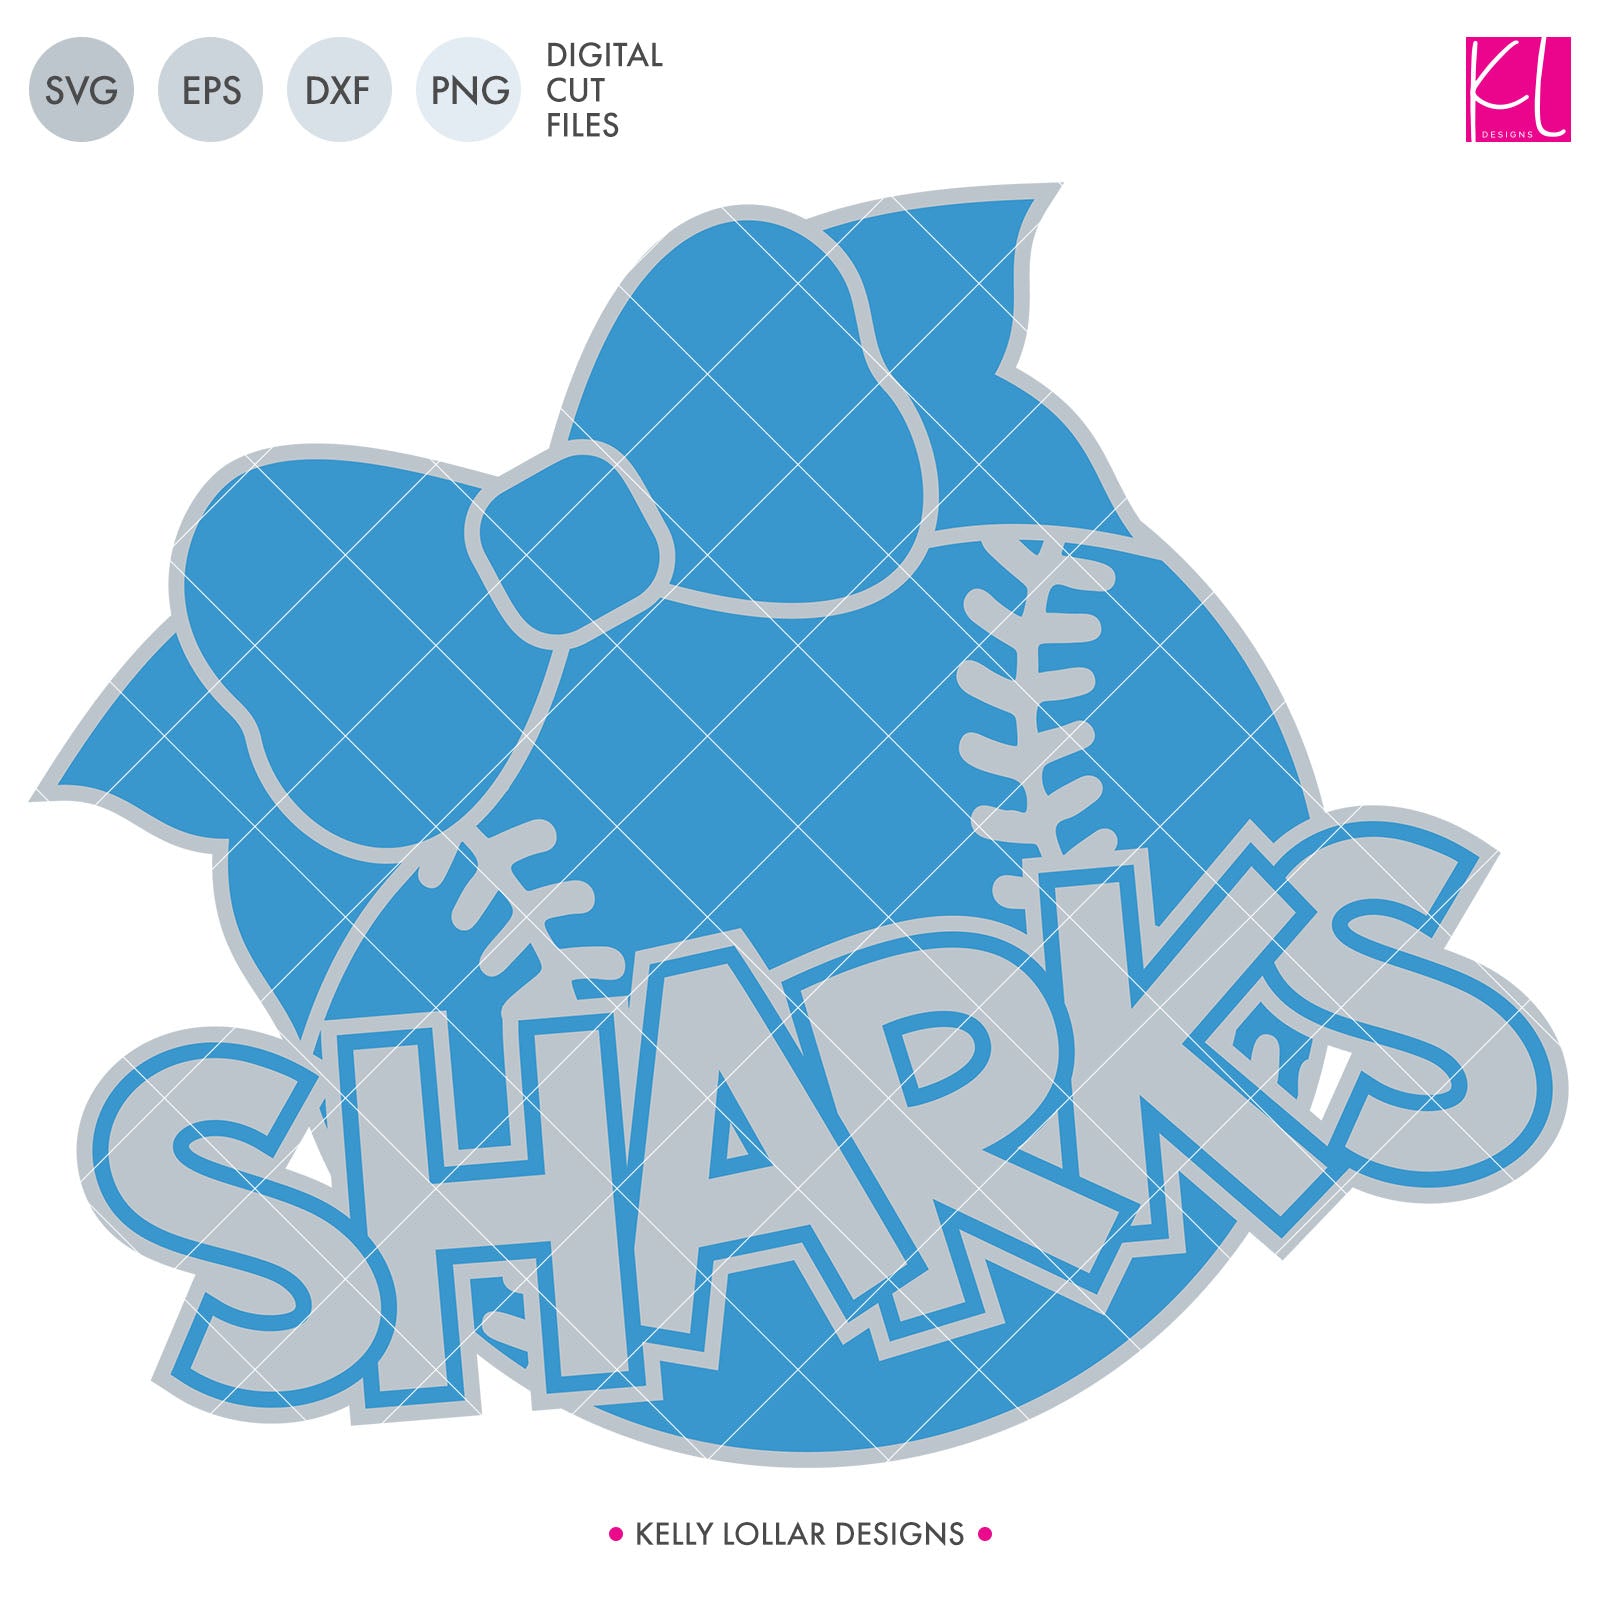 Download Sharks Baseball Softball Bundle Svg Dxf Eps Png Cut Files Kelly Lollar Designs